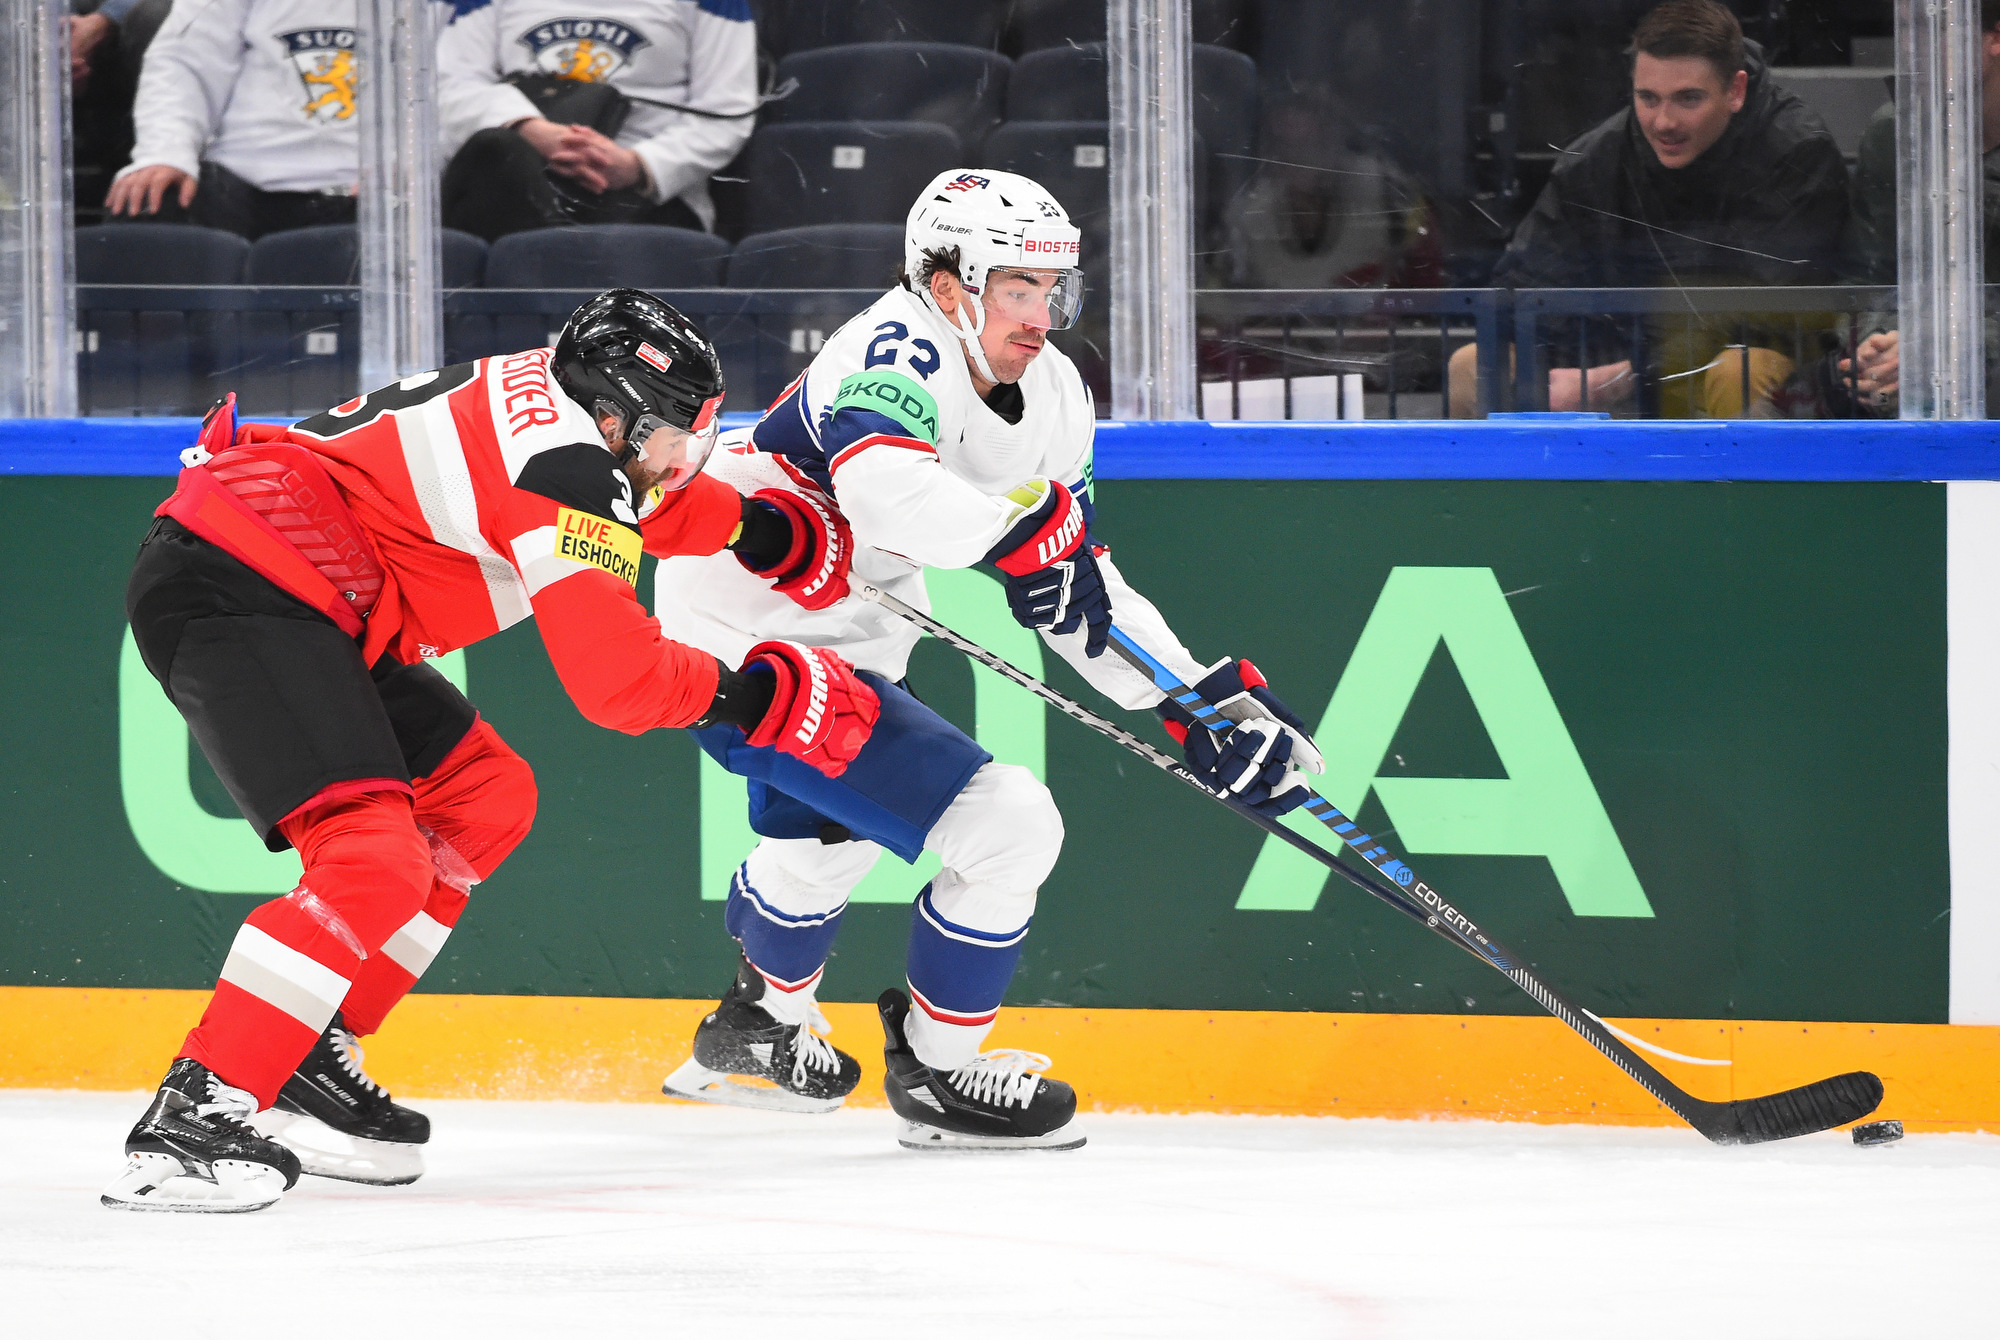 IIHF - Gallery United States vs Austria